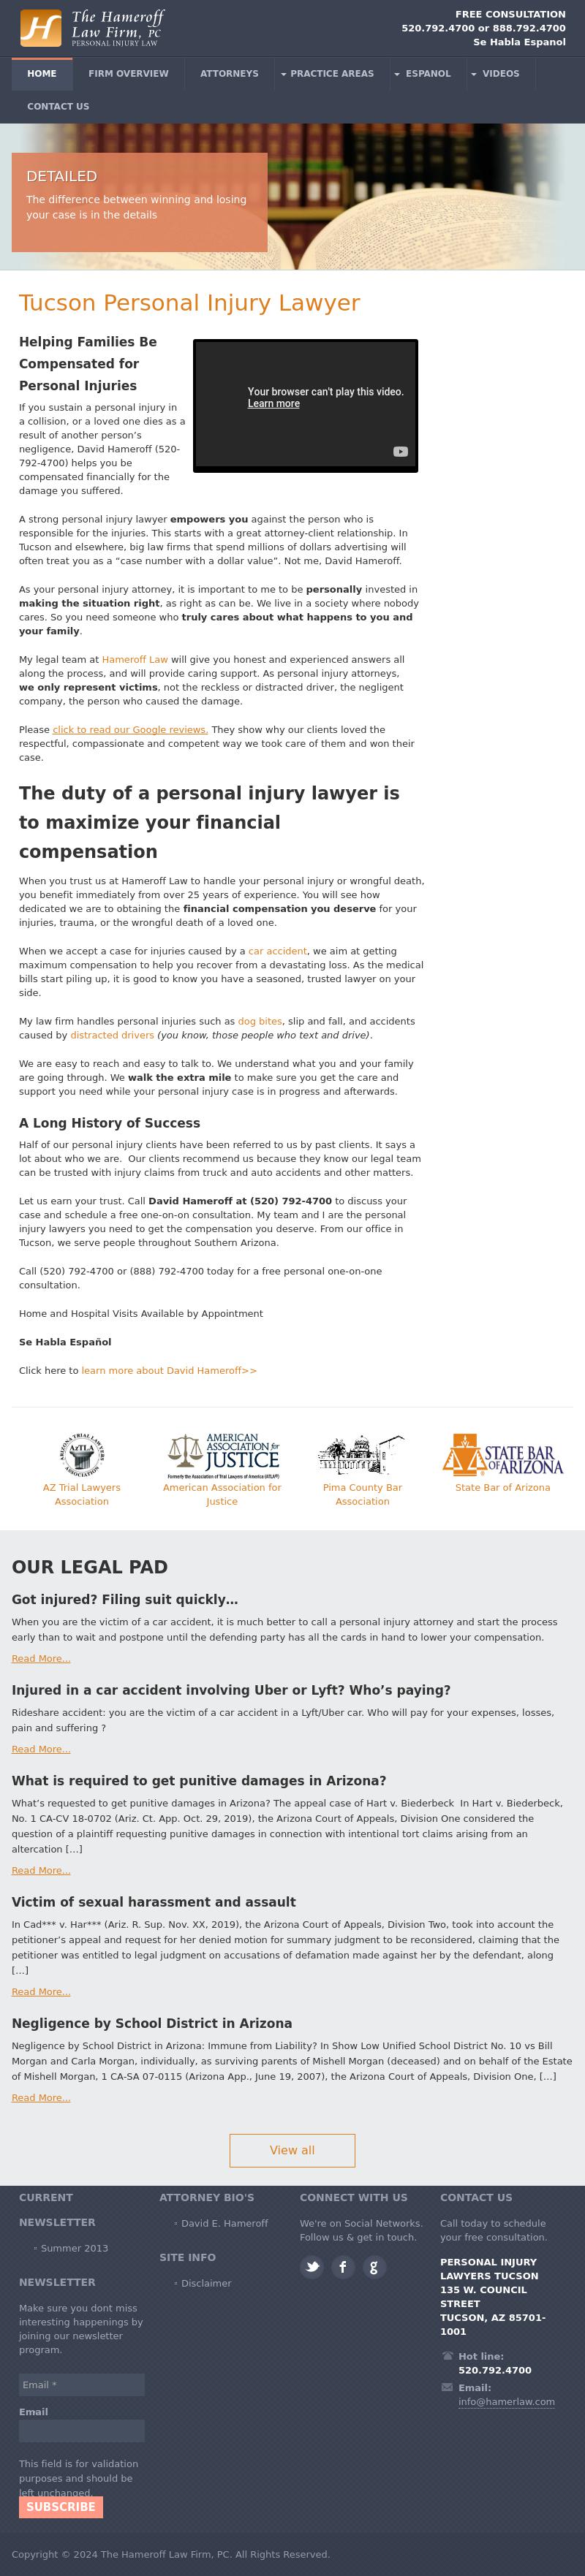 The Hameroff Law Firm - Tucson AZ Lawyers